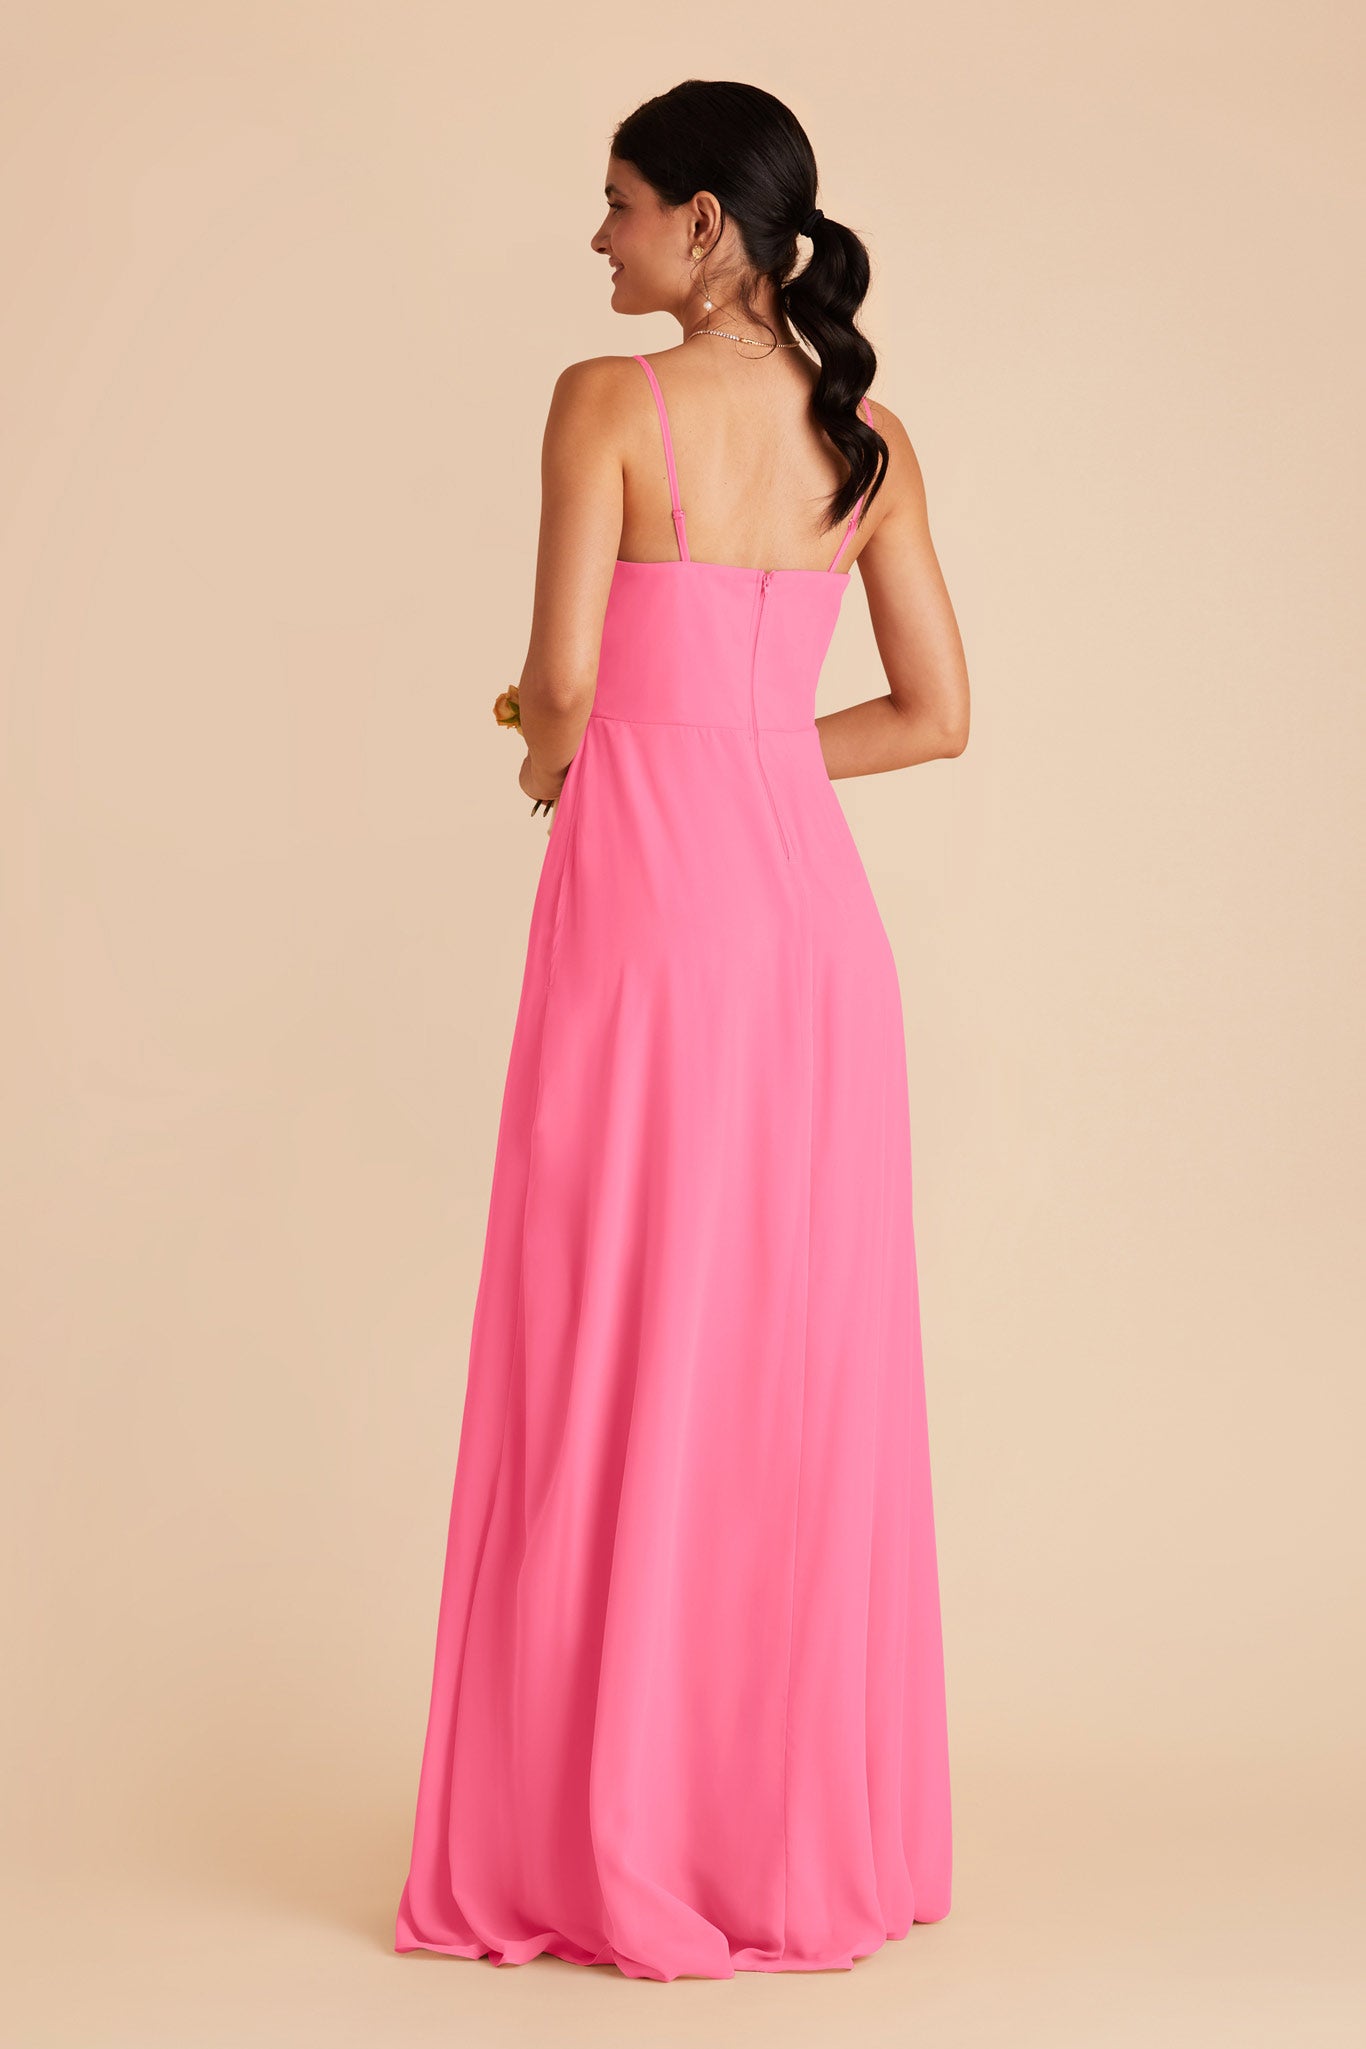 Bon Bon Pink Winnie Convertible Chiffon Dress by Birdy Grey